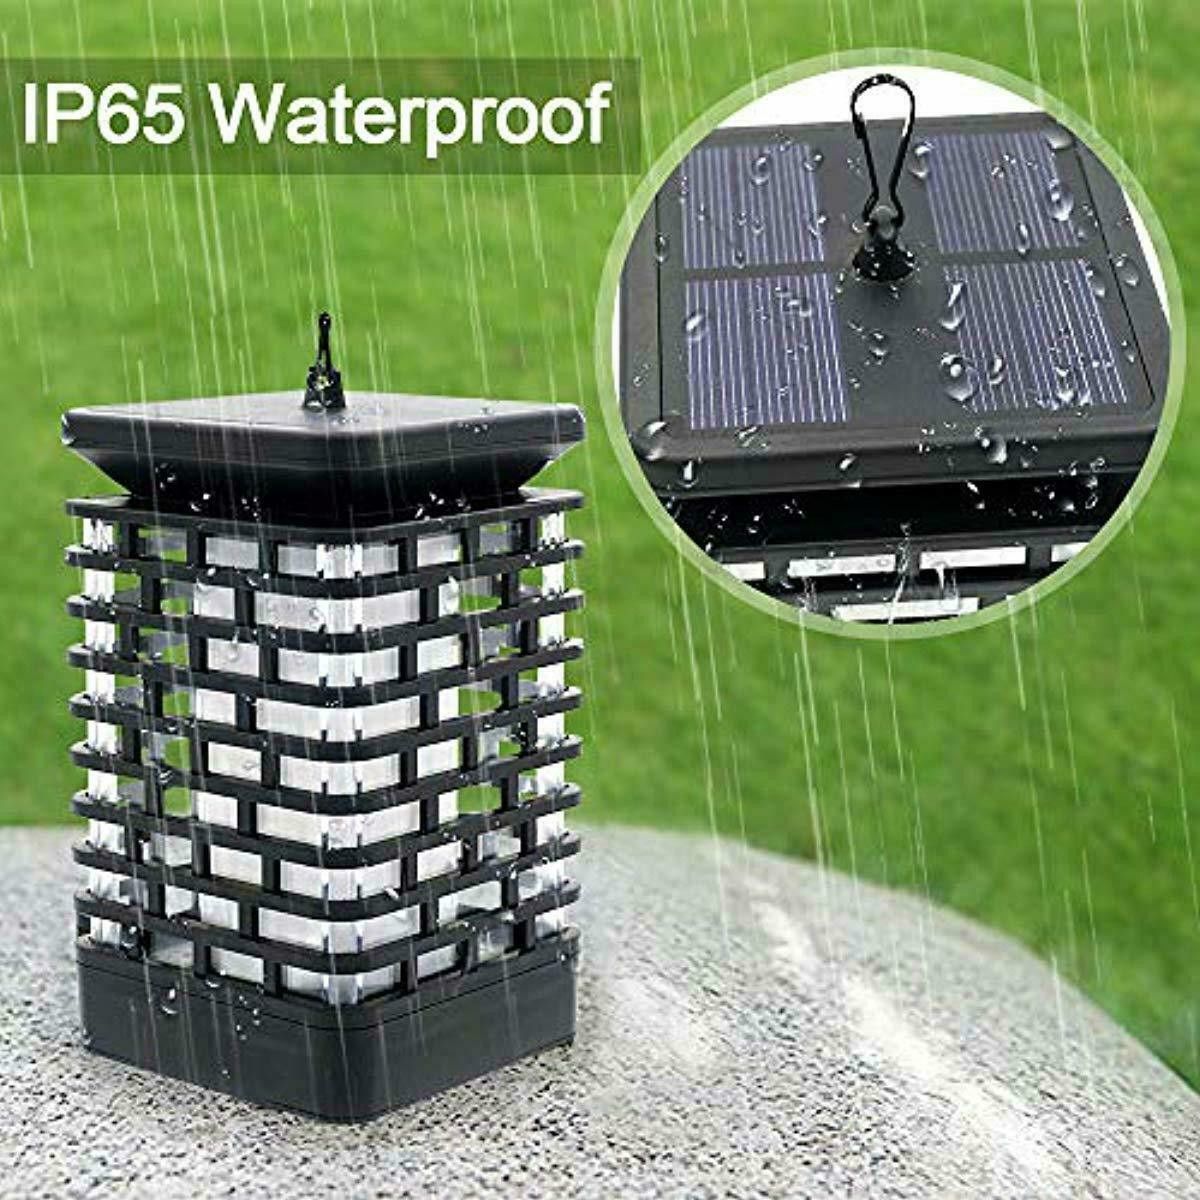 Solar-Flame-Lights-Hanging-Lanterns-Flickering-Torch-Lights-Outdoor-Waterproof-1682930